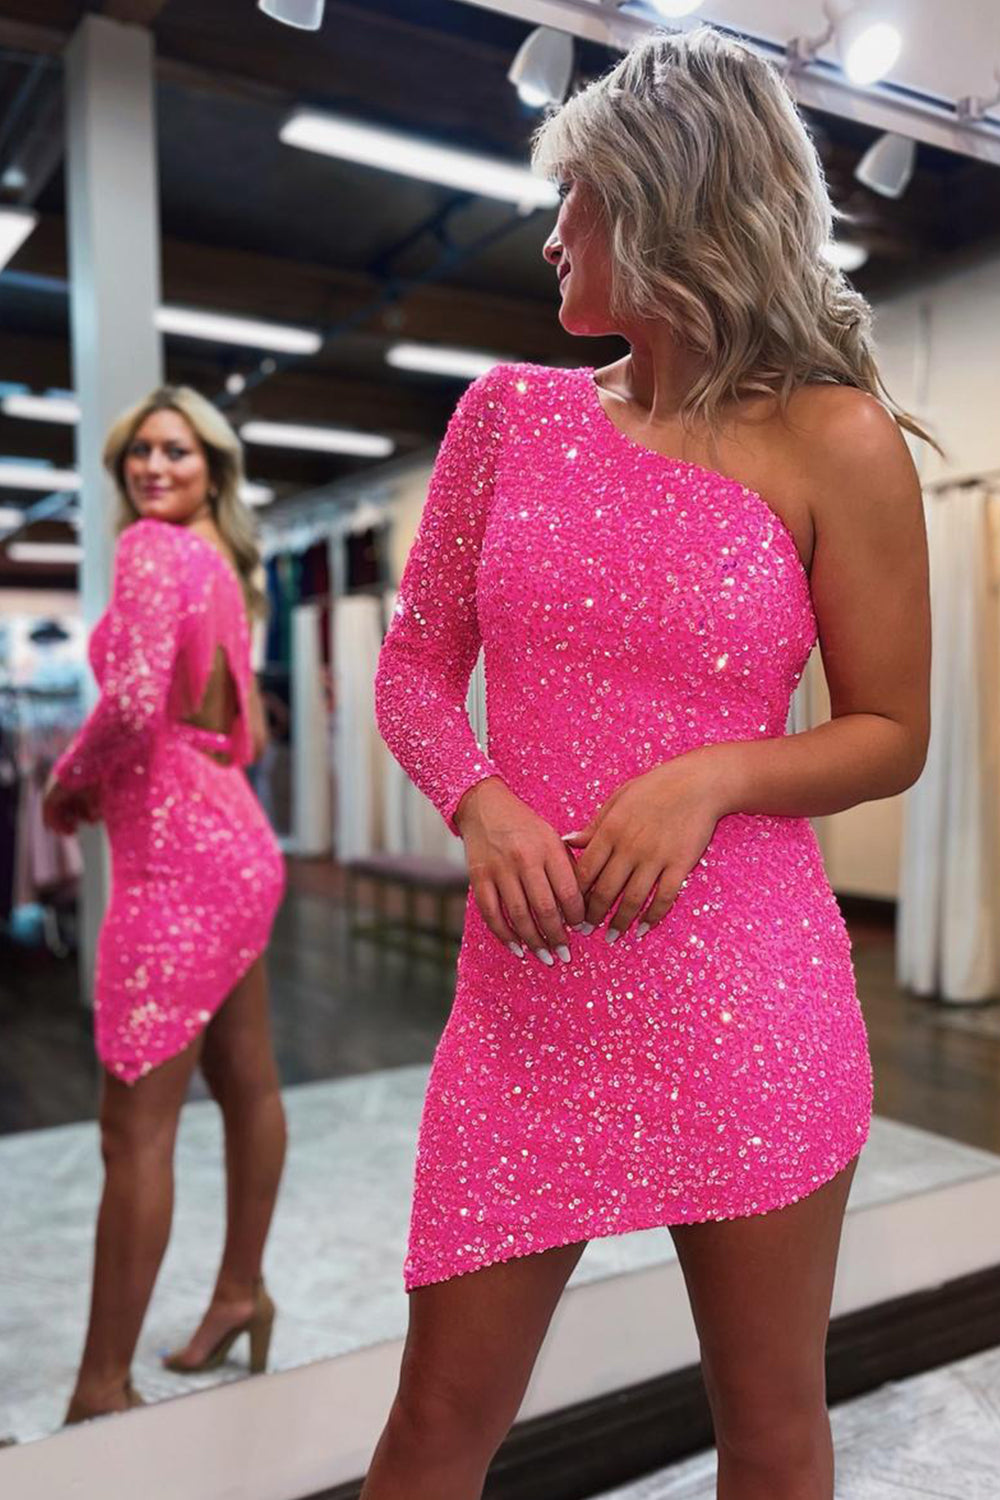 Sparkly Sheath One Shoulder Hot Pink Sequins Short Homecoming Dress with Fringes